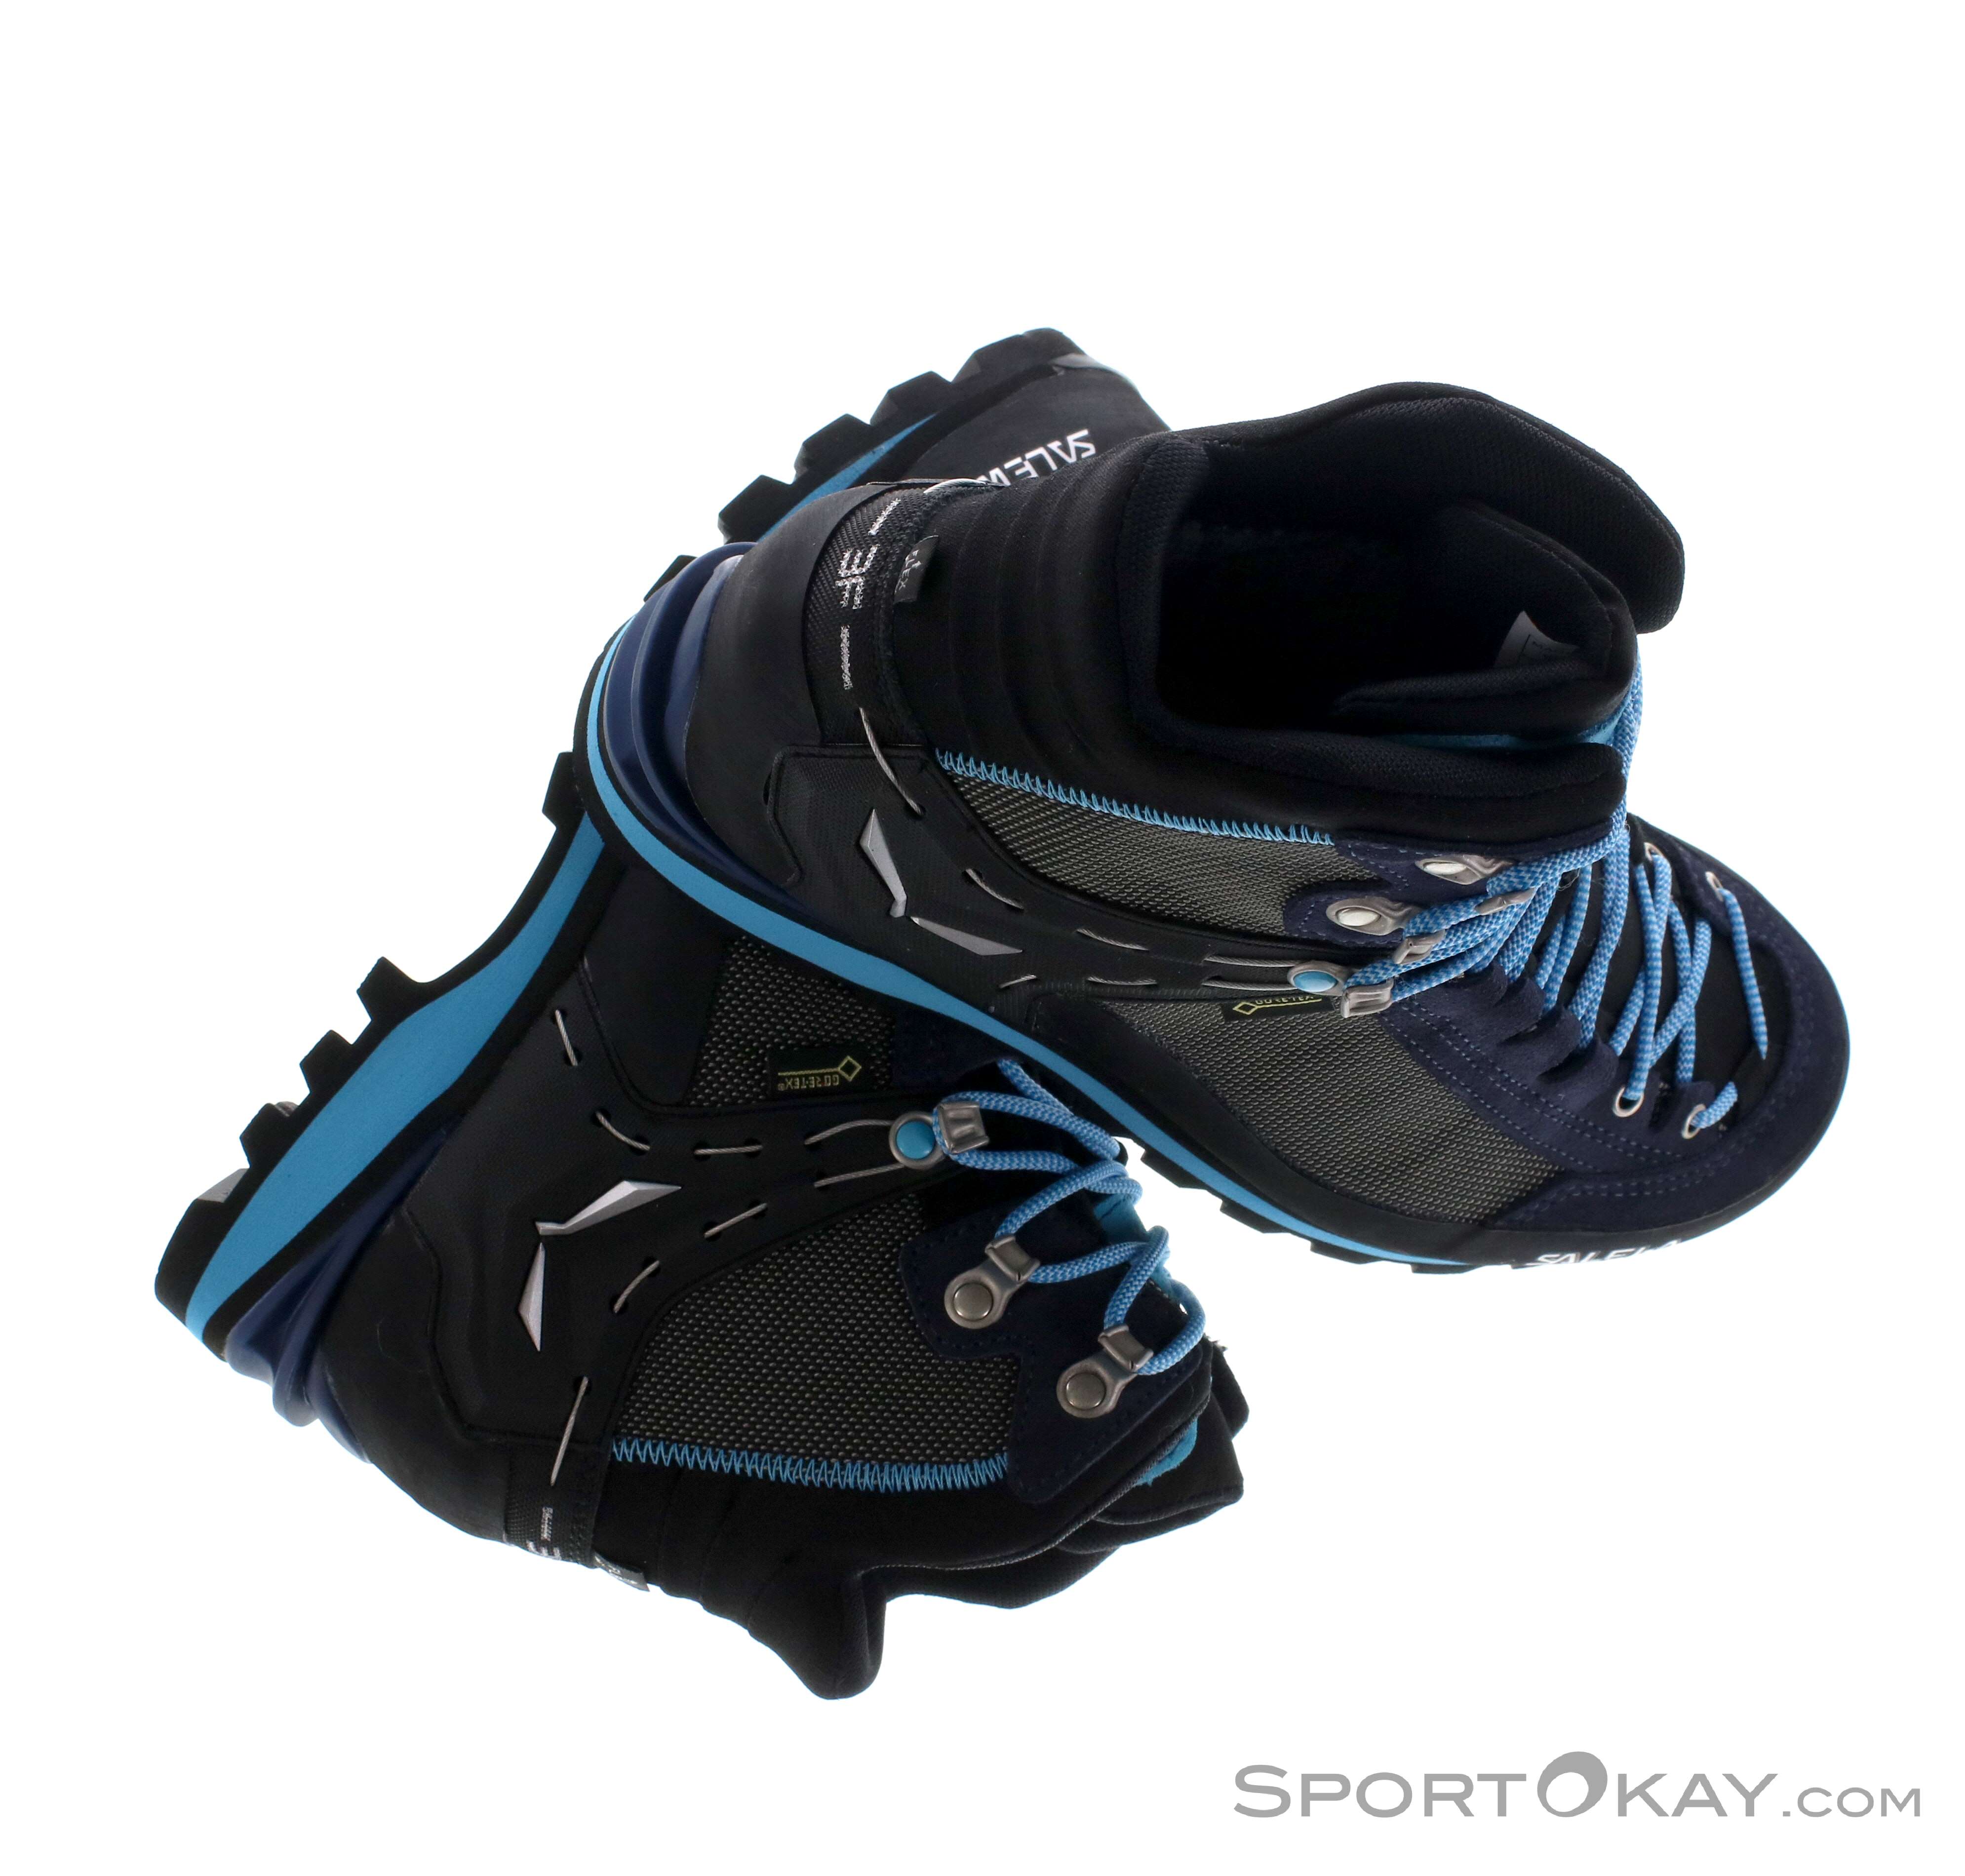 Salewa Ws Crow Gtx Premium Navy/Ethernal Blue Calzado montañismo